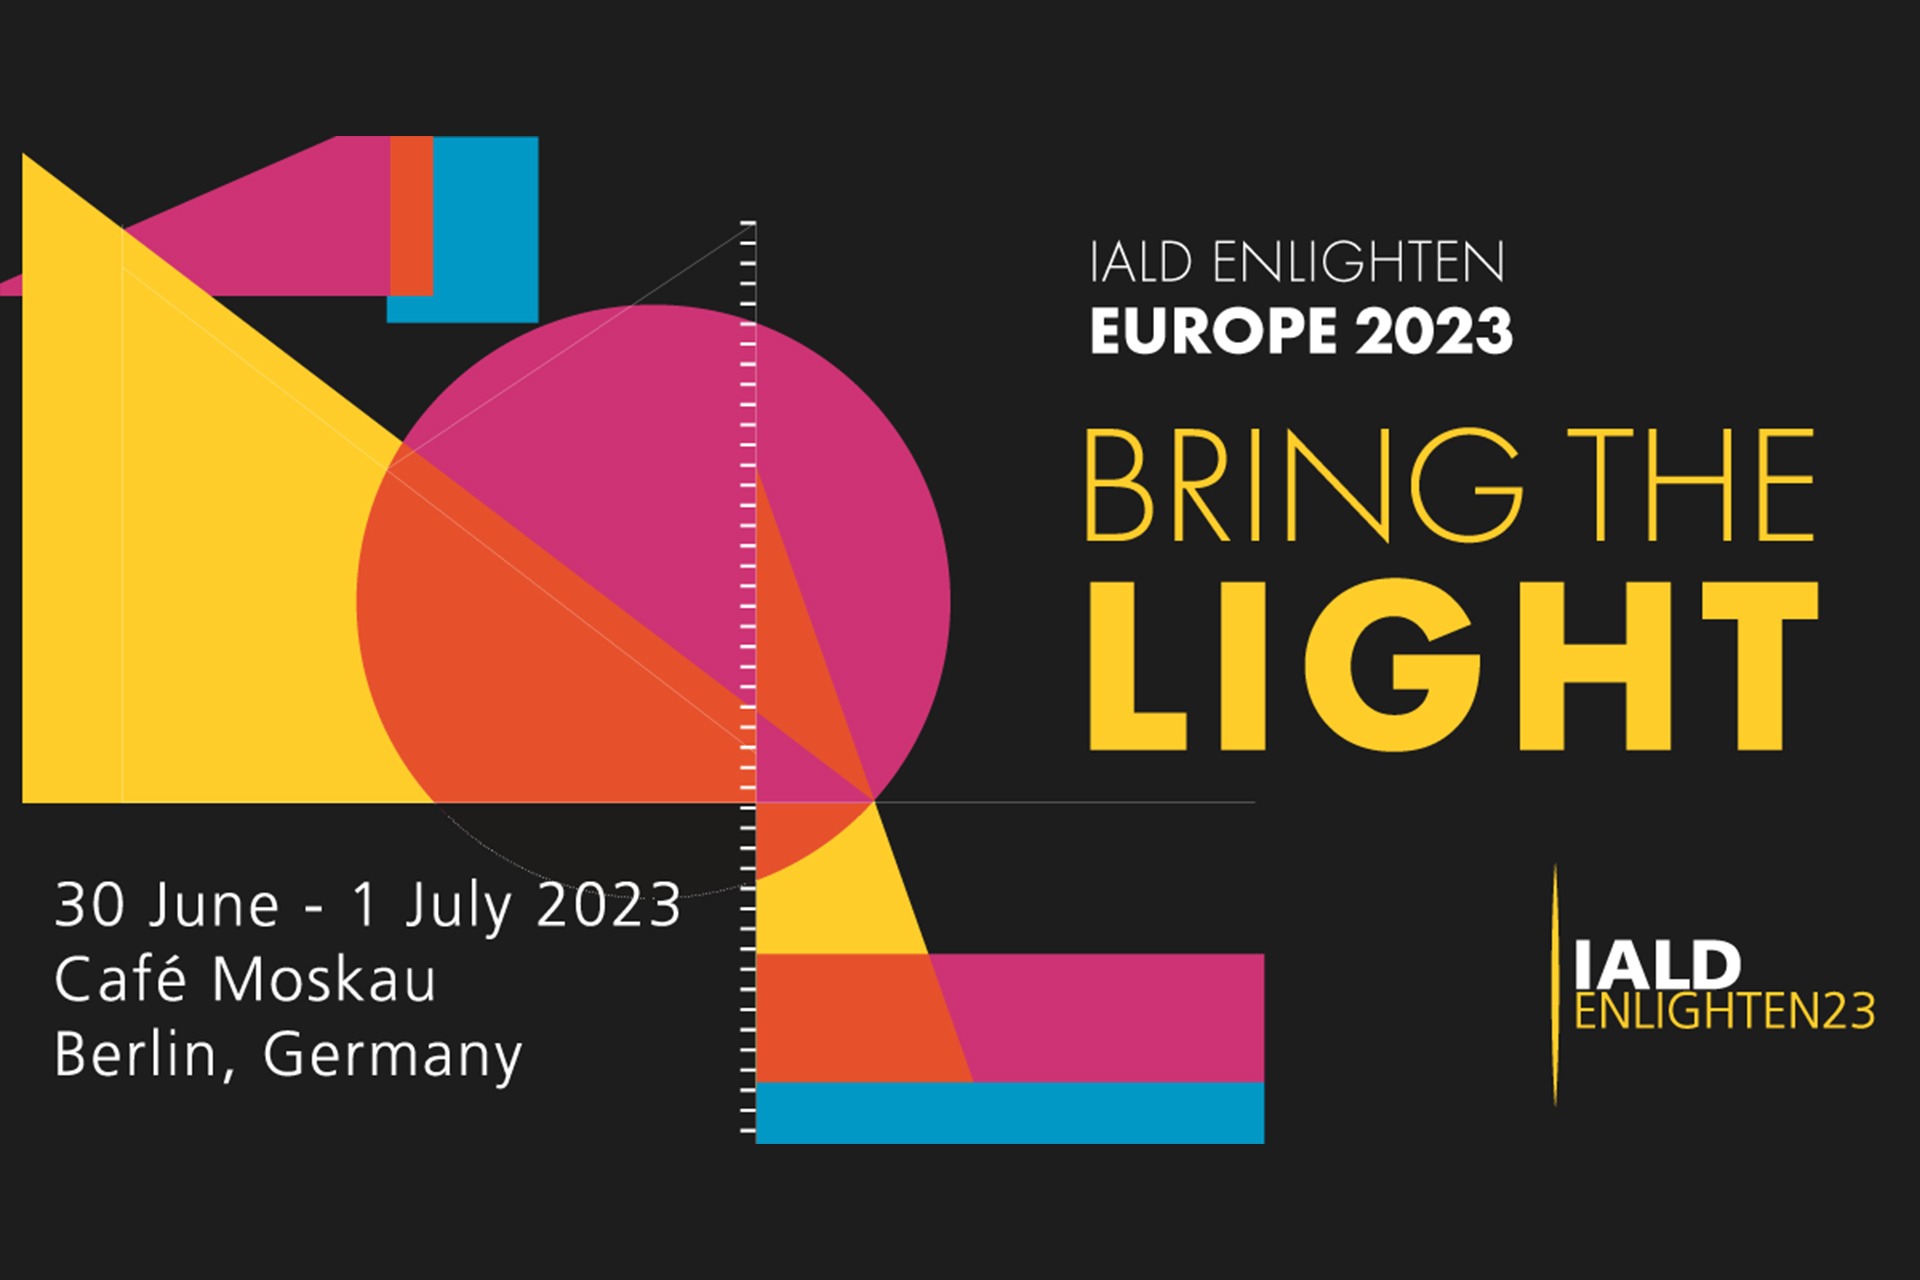 IALD Enlighten Europe 2023 opens for registration arc